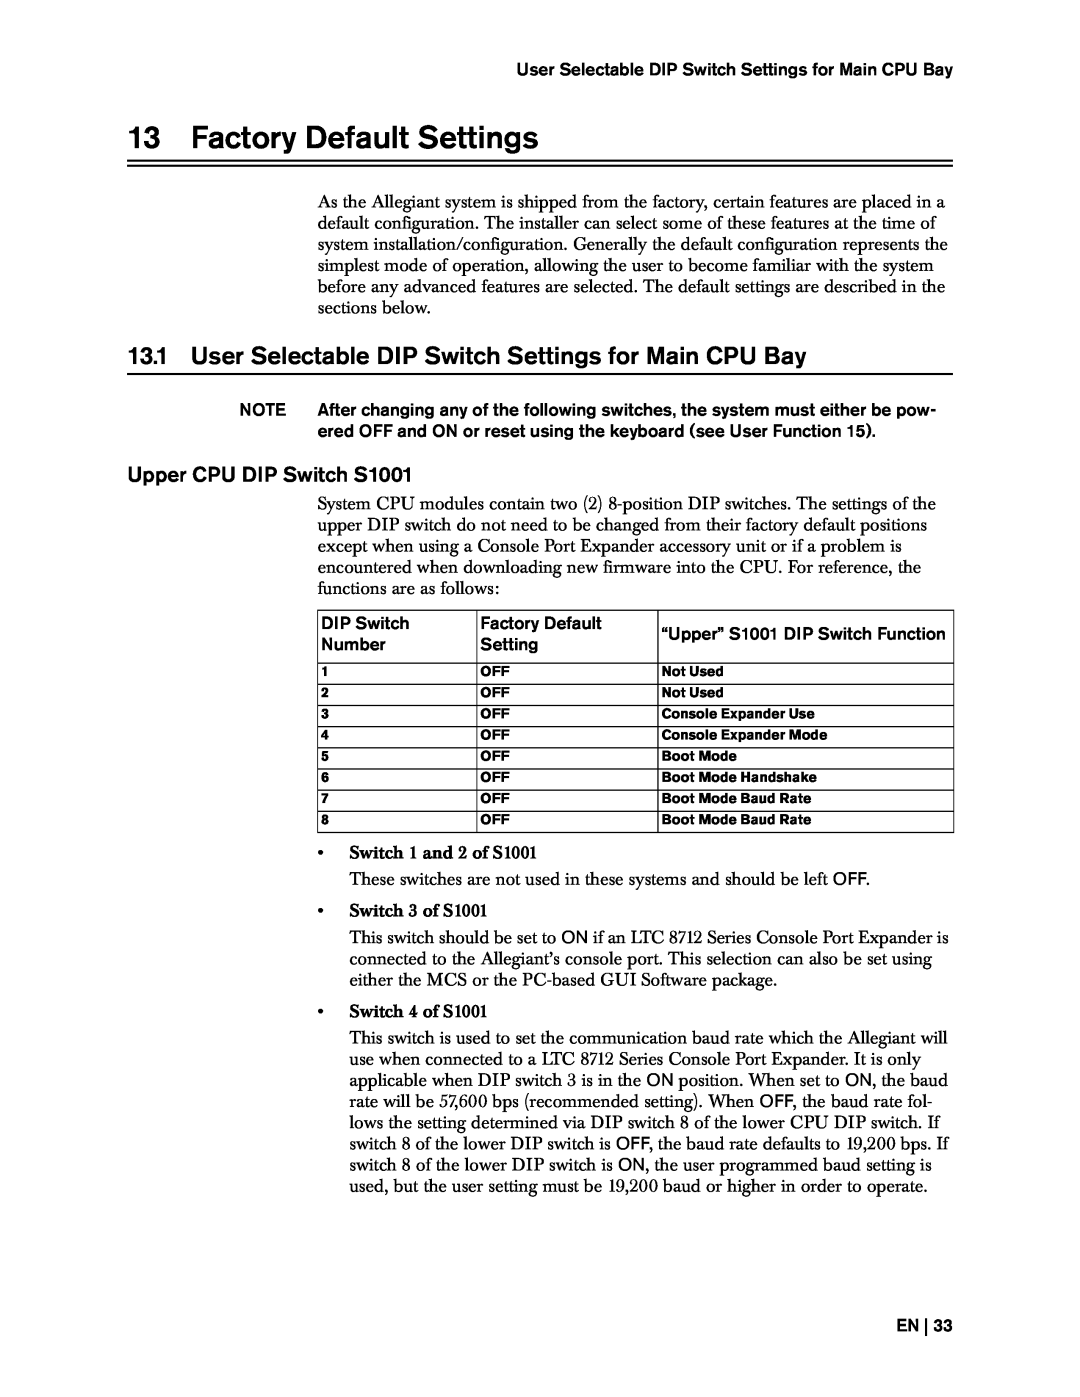 Bosch Appliances 8500, LTC instruction manual Factory Default Settings, Upper CPU DIP Switch S1001 